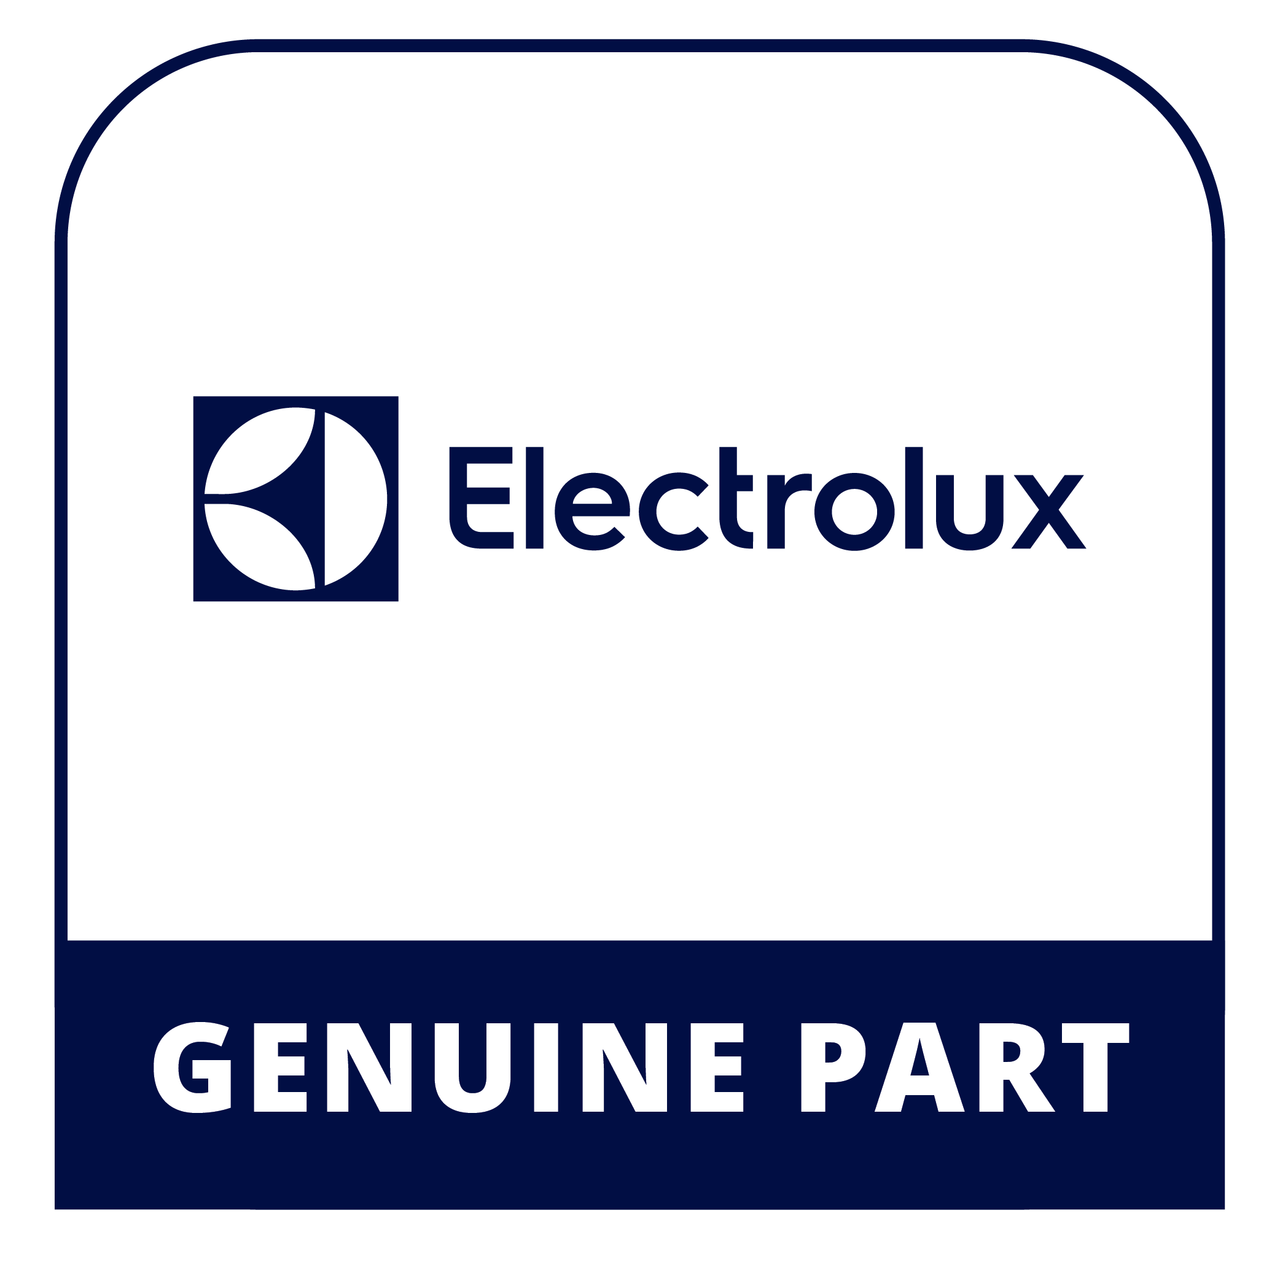 Frigidaire - Electrolux 316575921 - Hinge - Genuine Electrolux Part